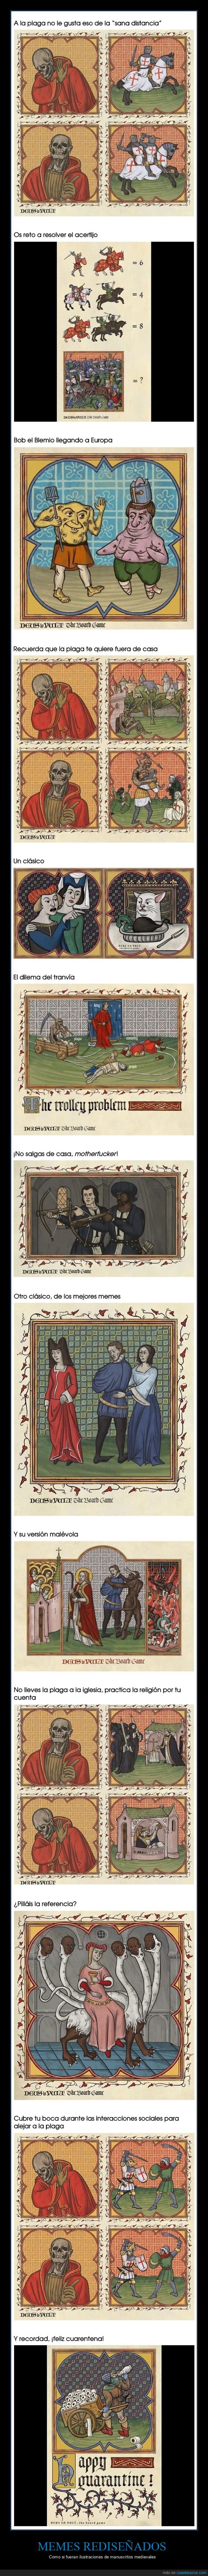 memes,medievales,edad media,cuarentena,coronavirus